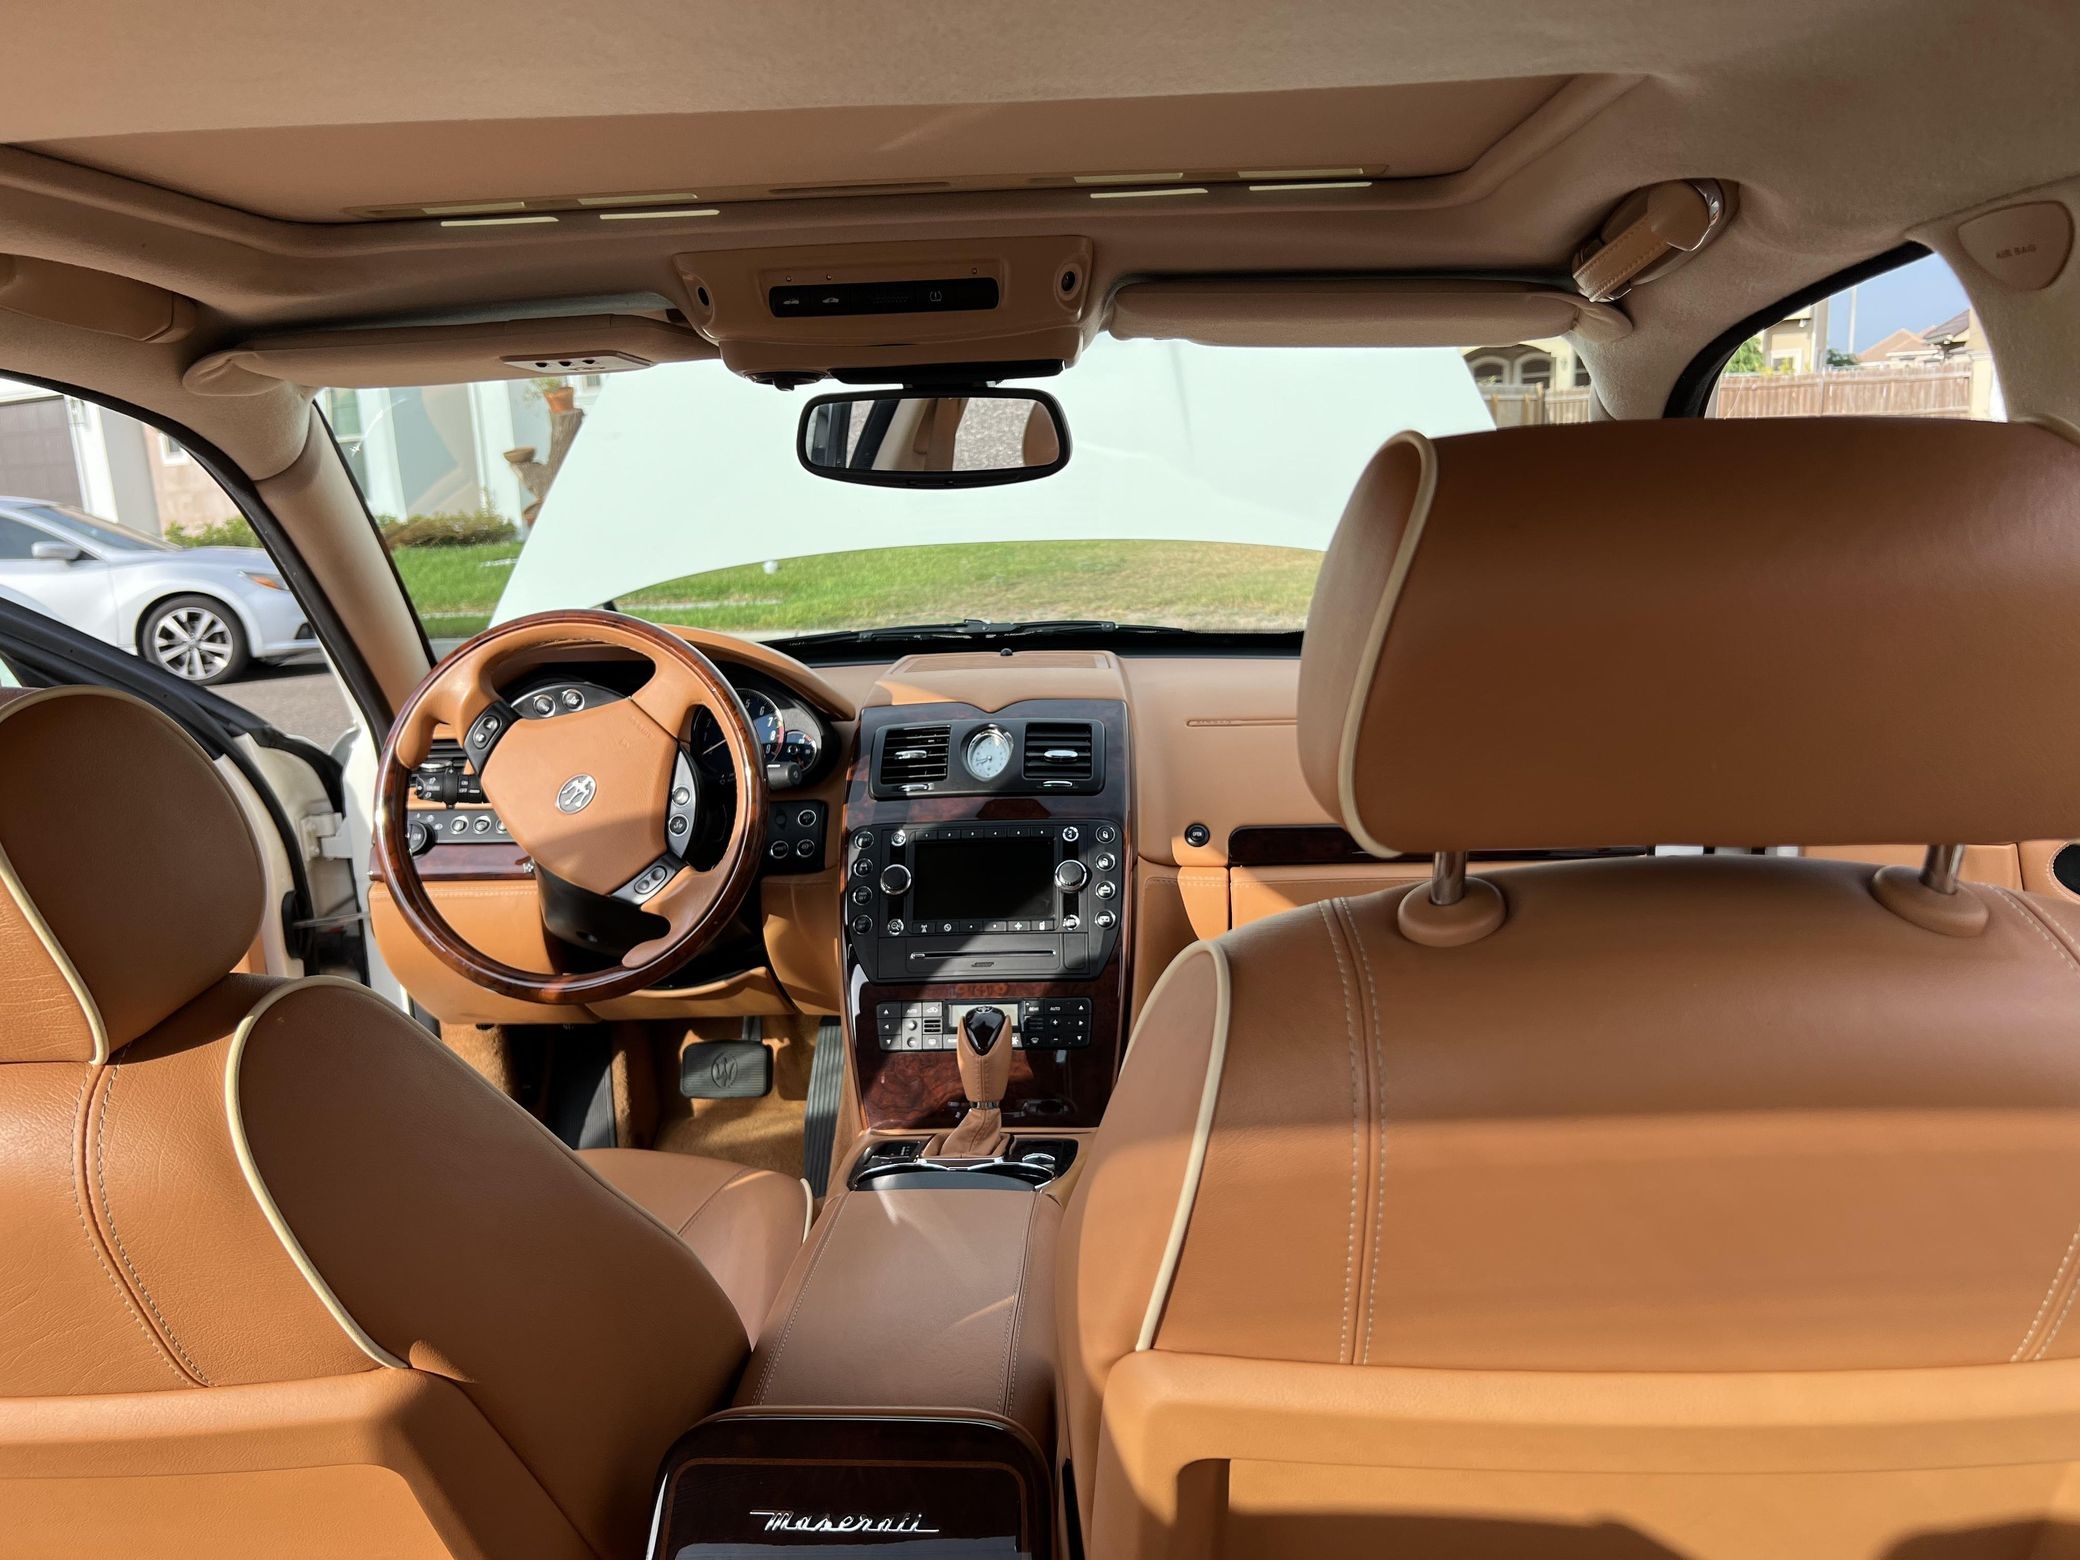 The brown-leather interior and dashboard of a 2010 Maserati Quattroporte S